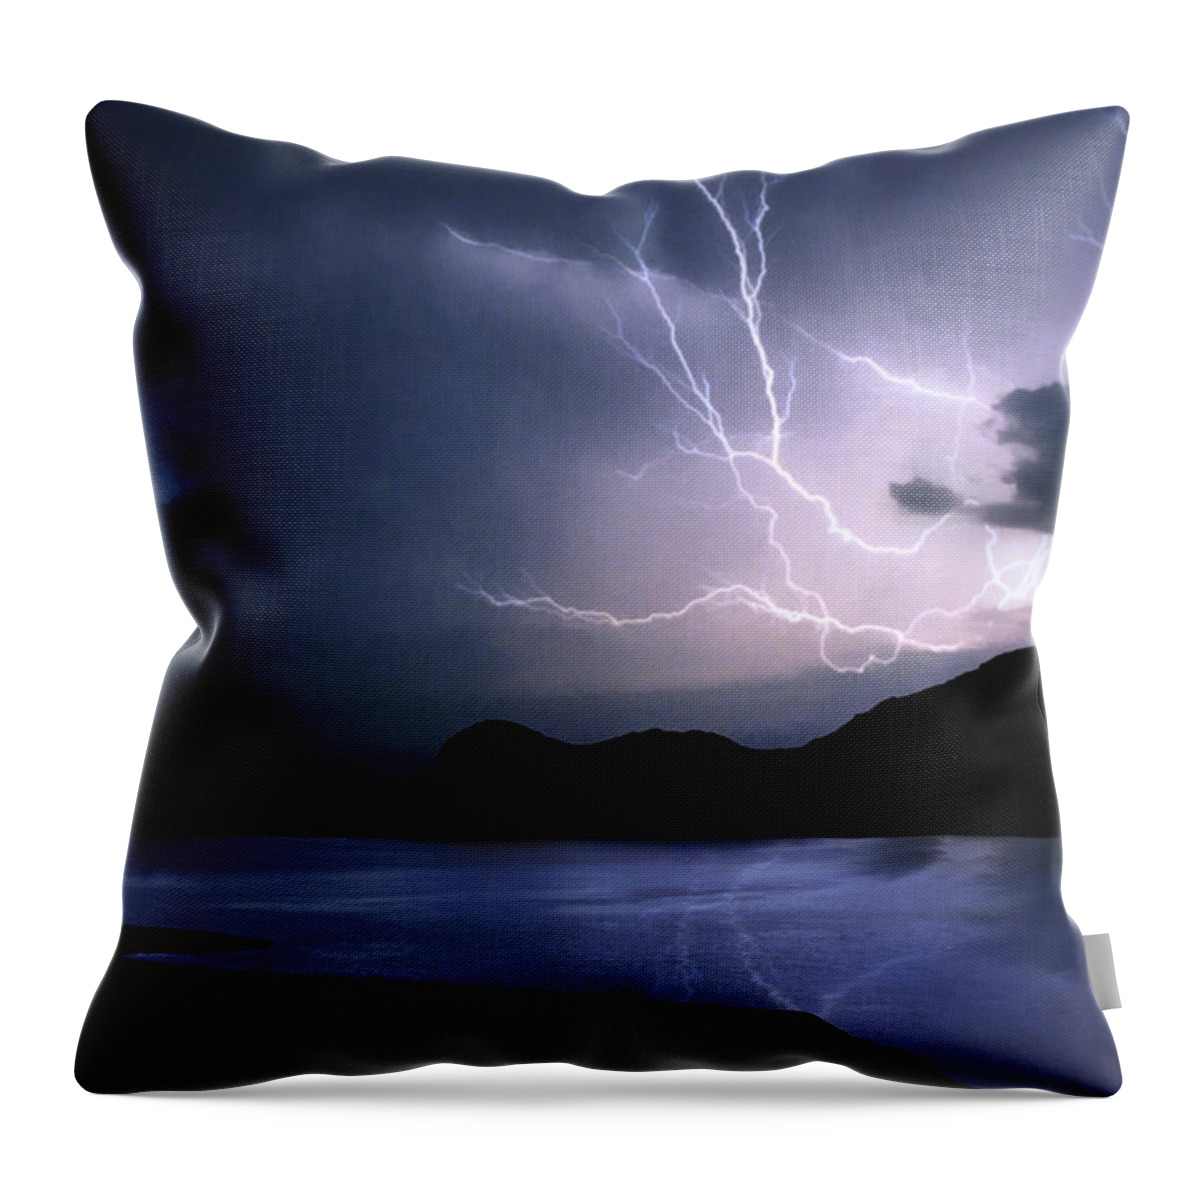 Oklahoma Throw Pillow featuring the photograph Lightning over Quartz Mountains - Oklahoma by Jason Politte